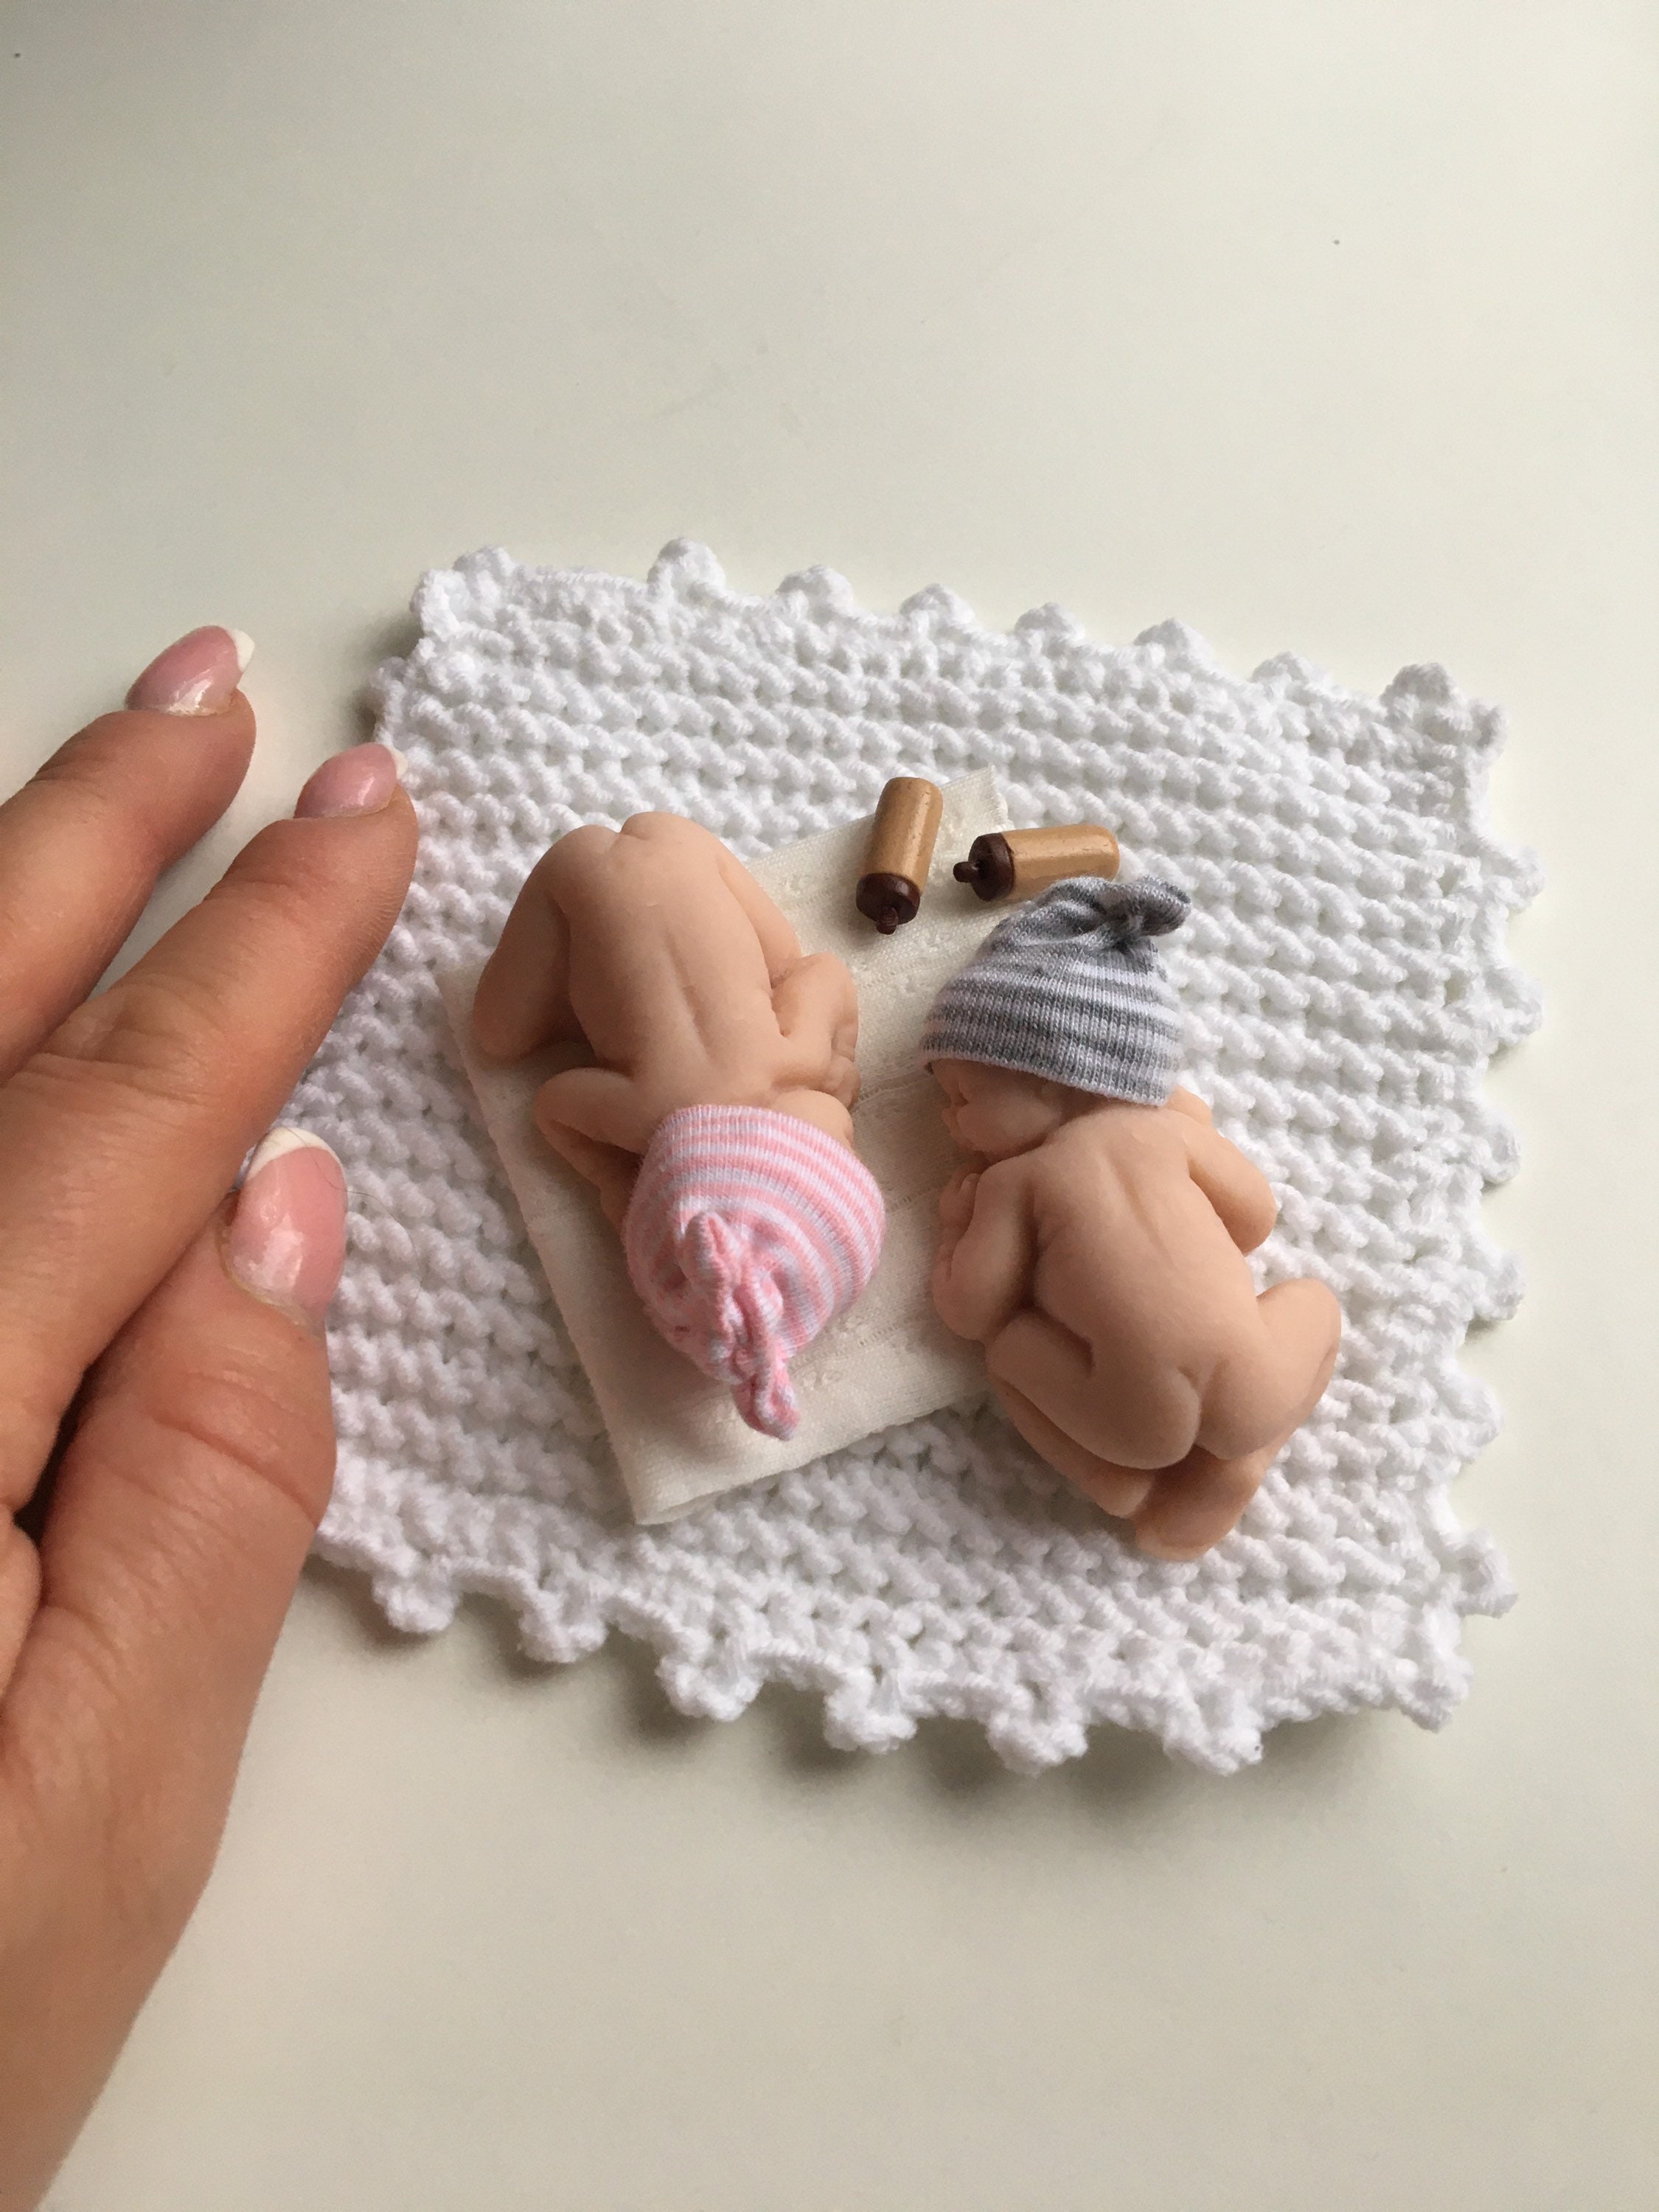 Artist creates miniature babies for bereaved parents seeking